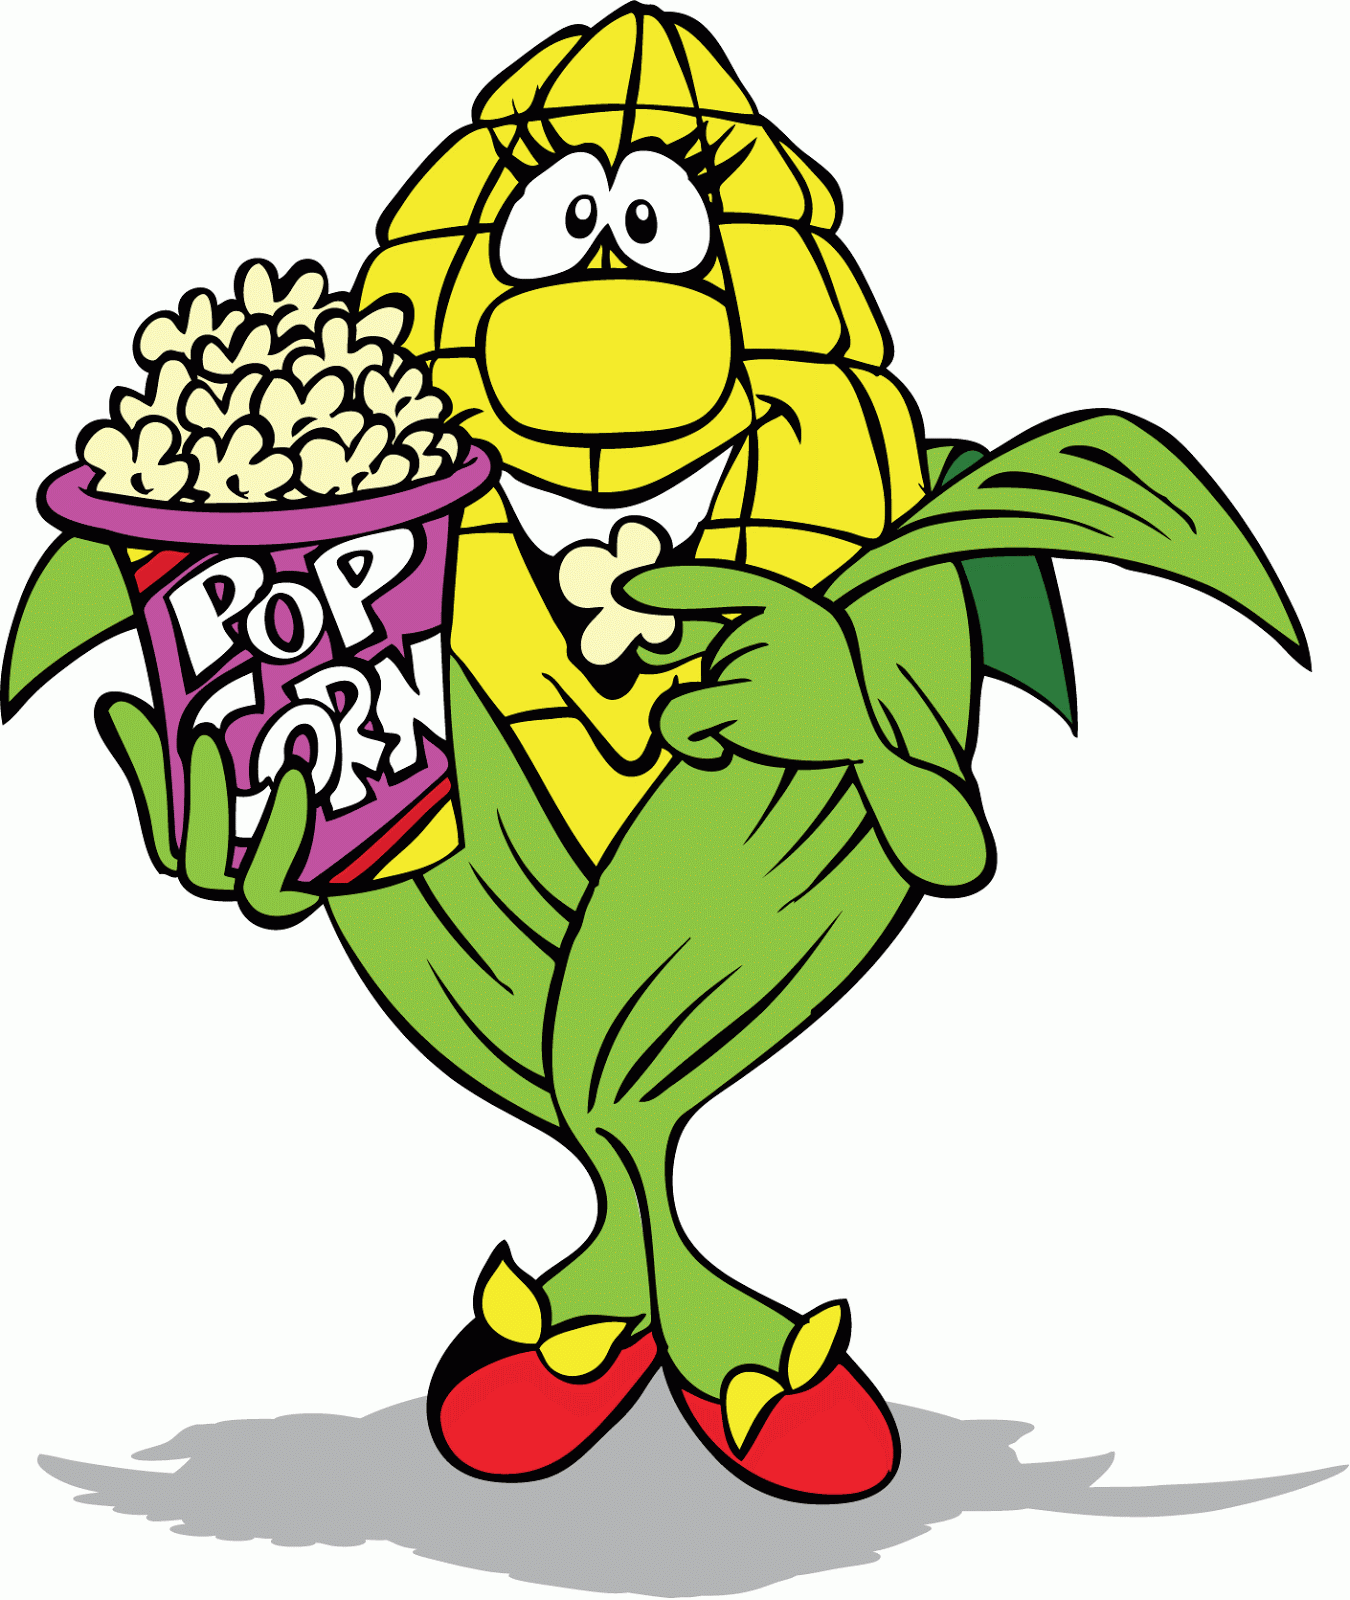 Cartoon Popcorn Images - Cliparts.co